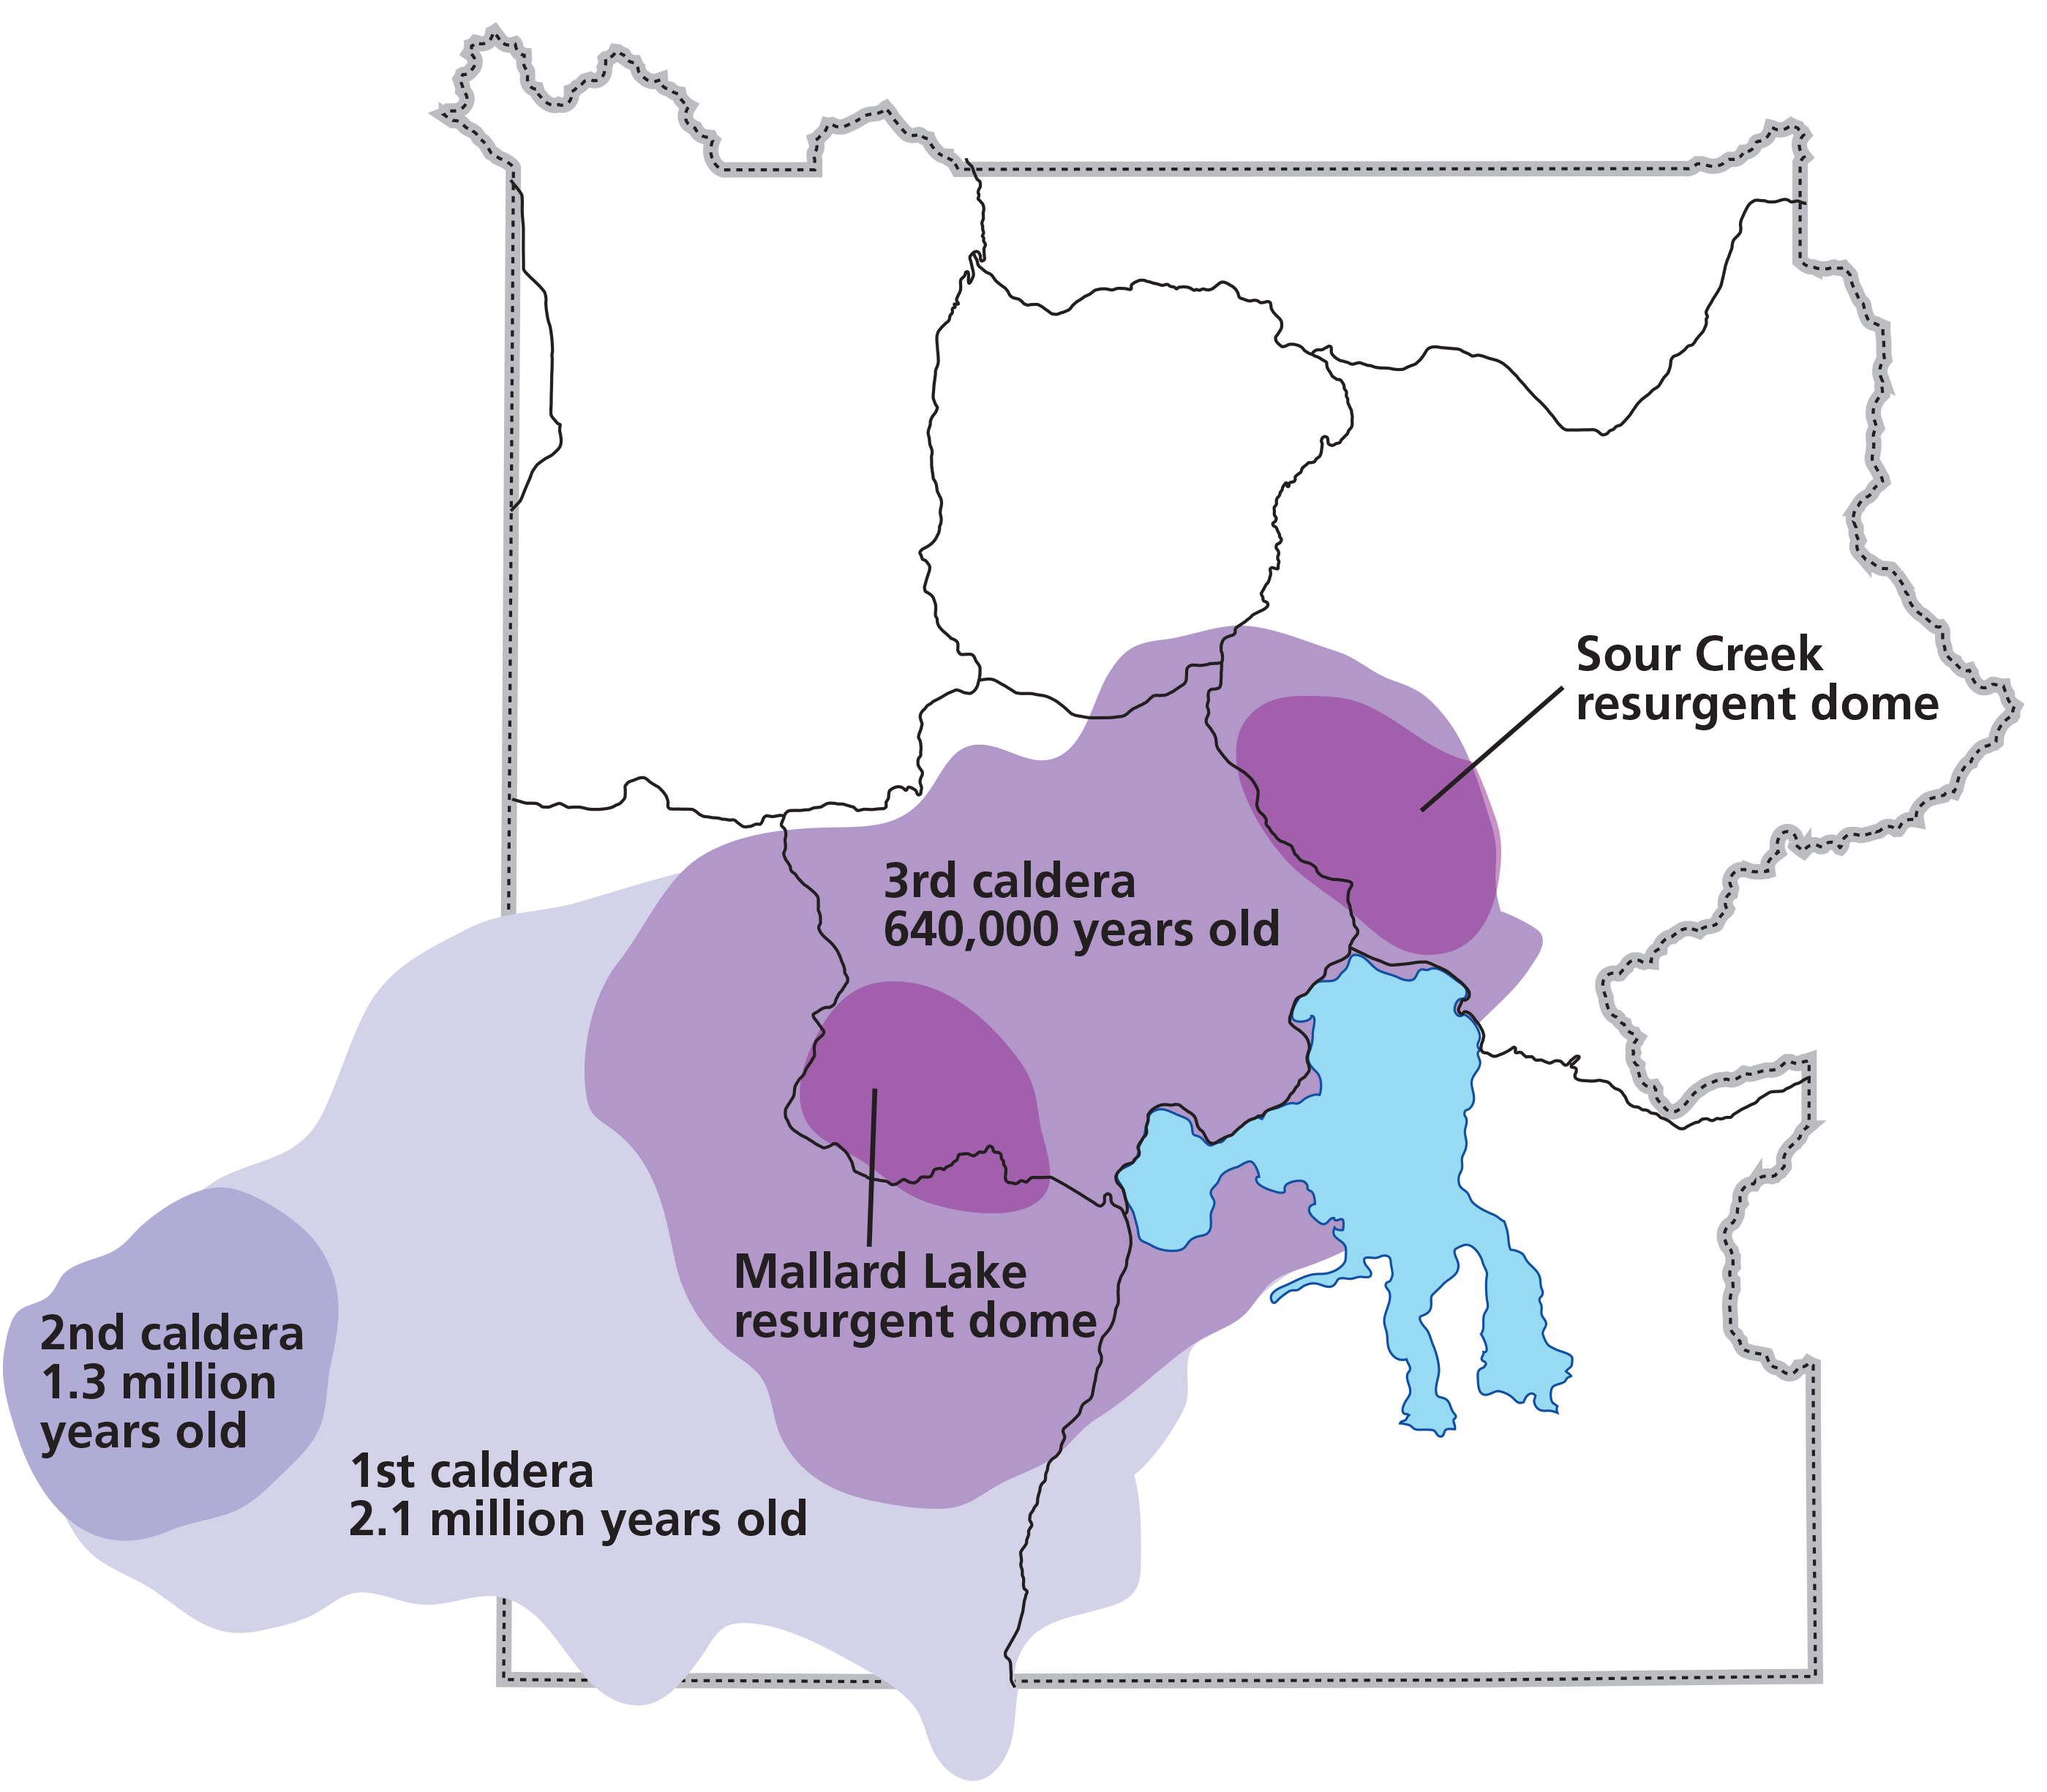 map of yellowstone showing the locaton of three calderas